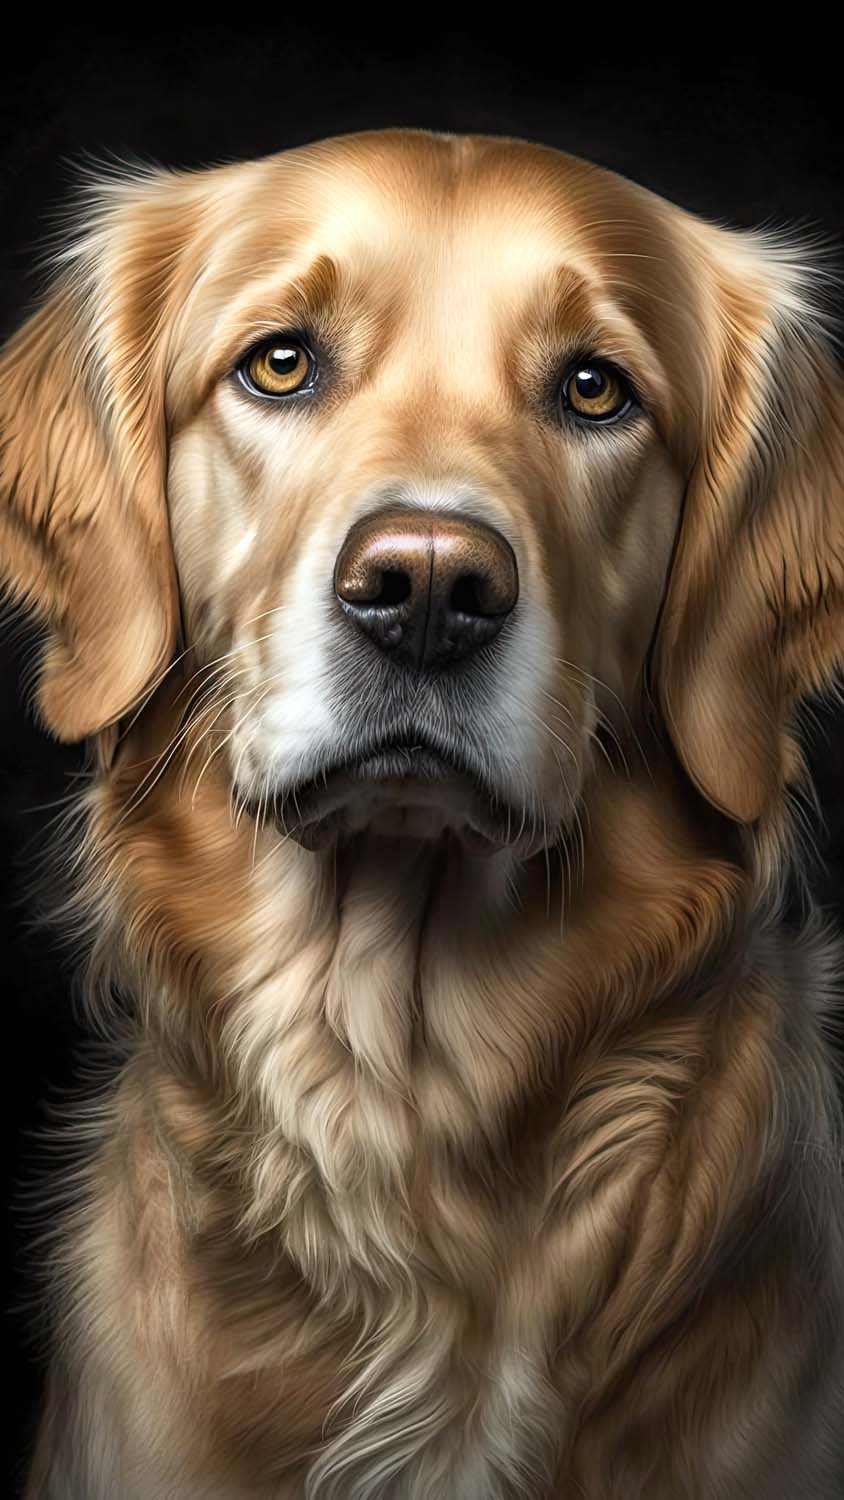 Download wallpaper 938x1668 golden retriever dog hat garland pet iphone  876s6 for parallax hd background